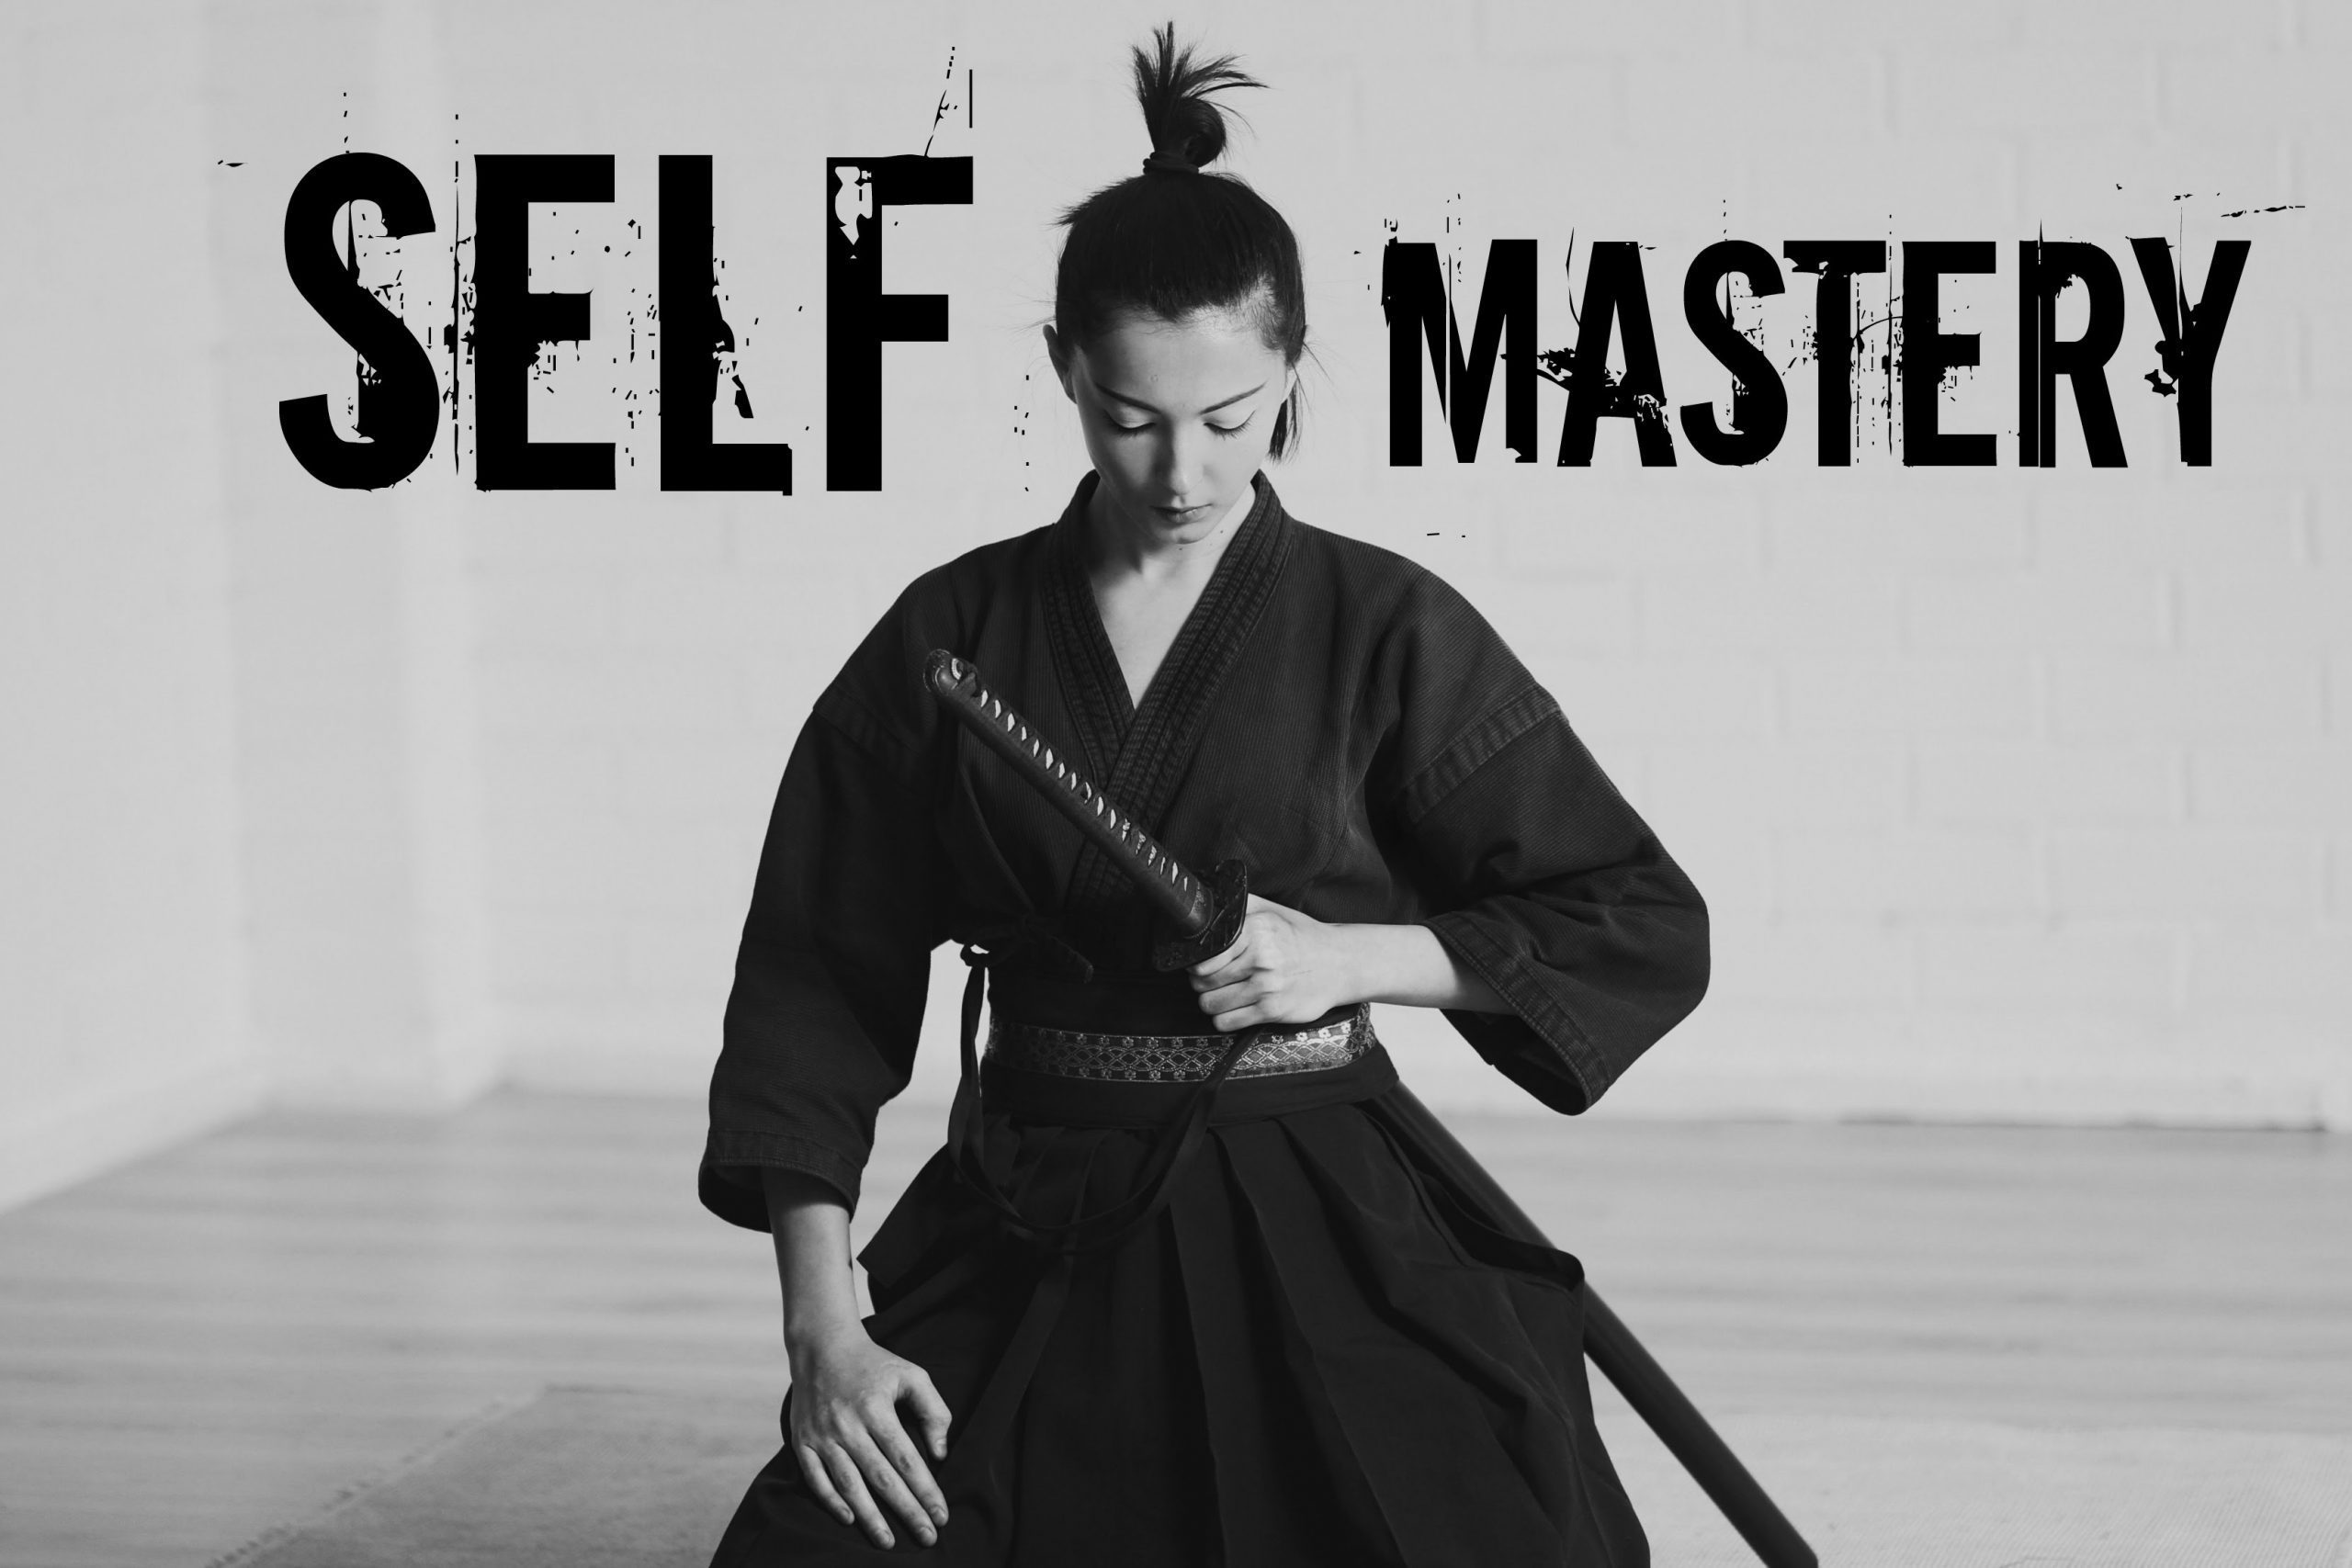 self-mastery